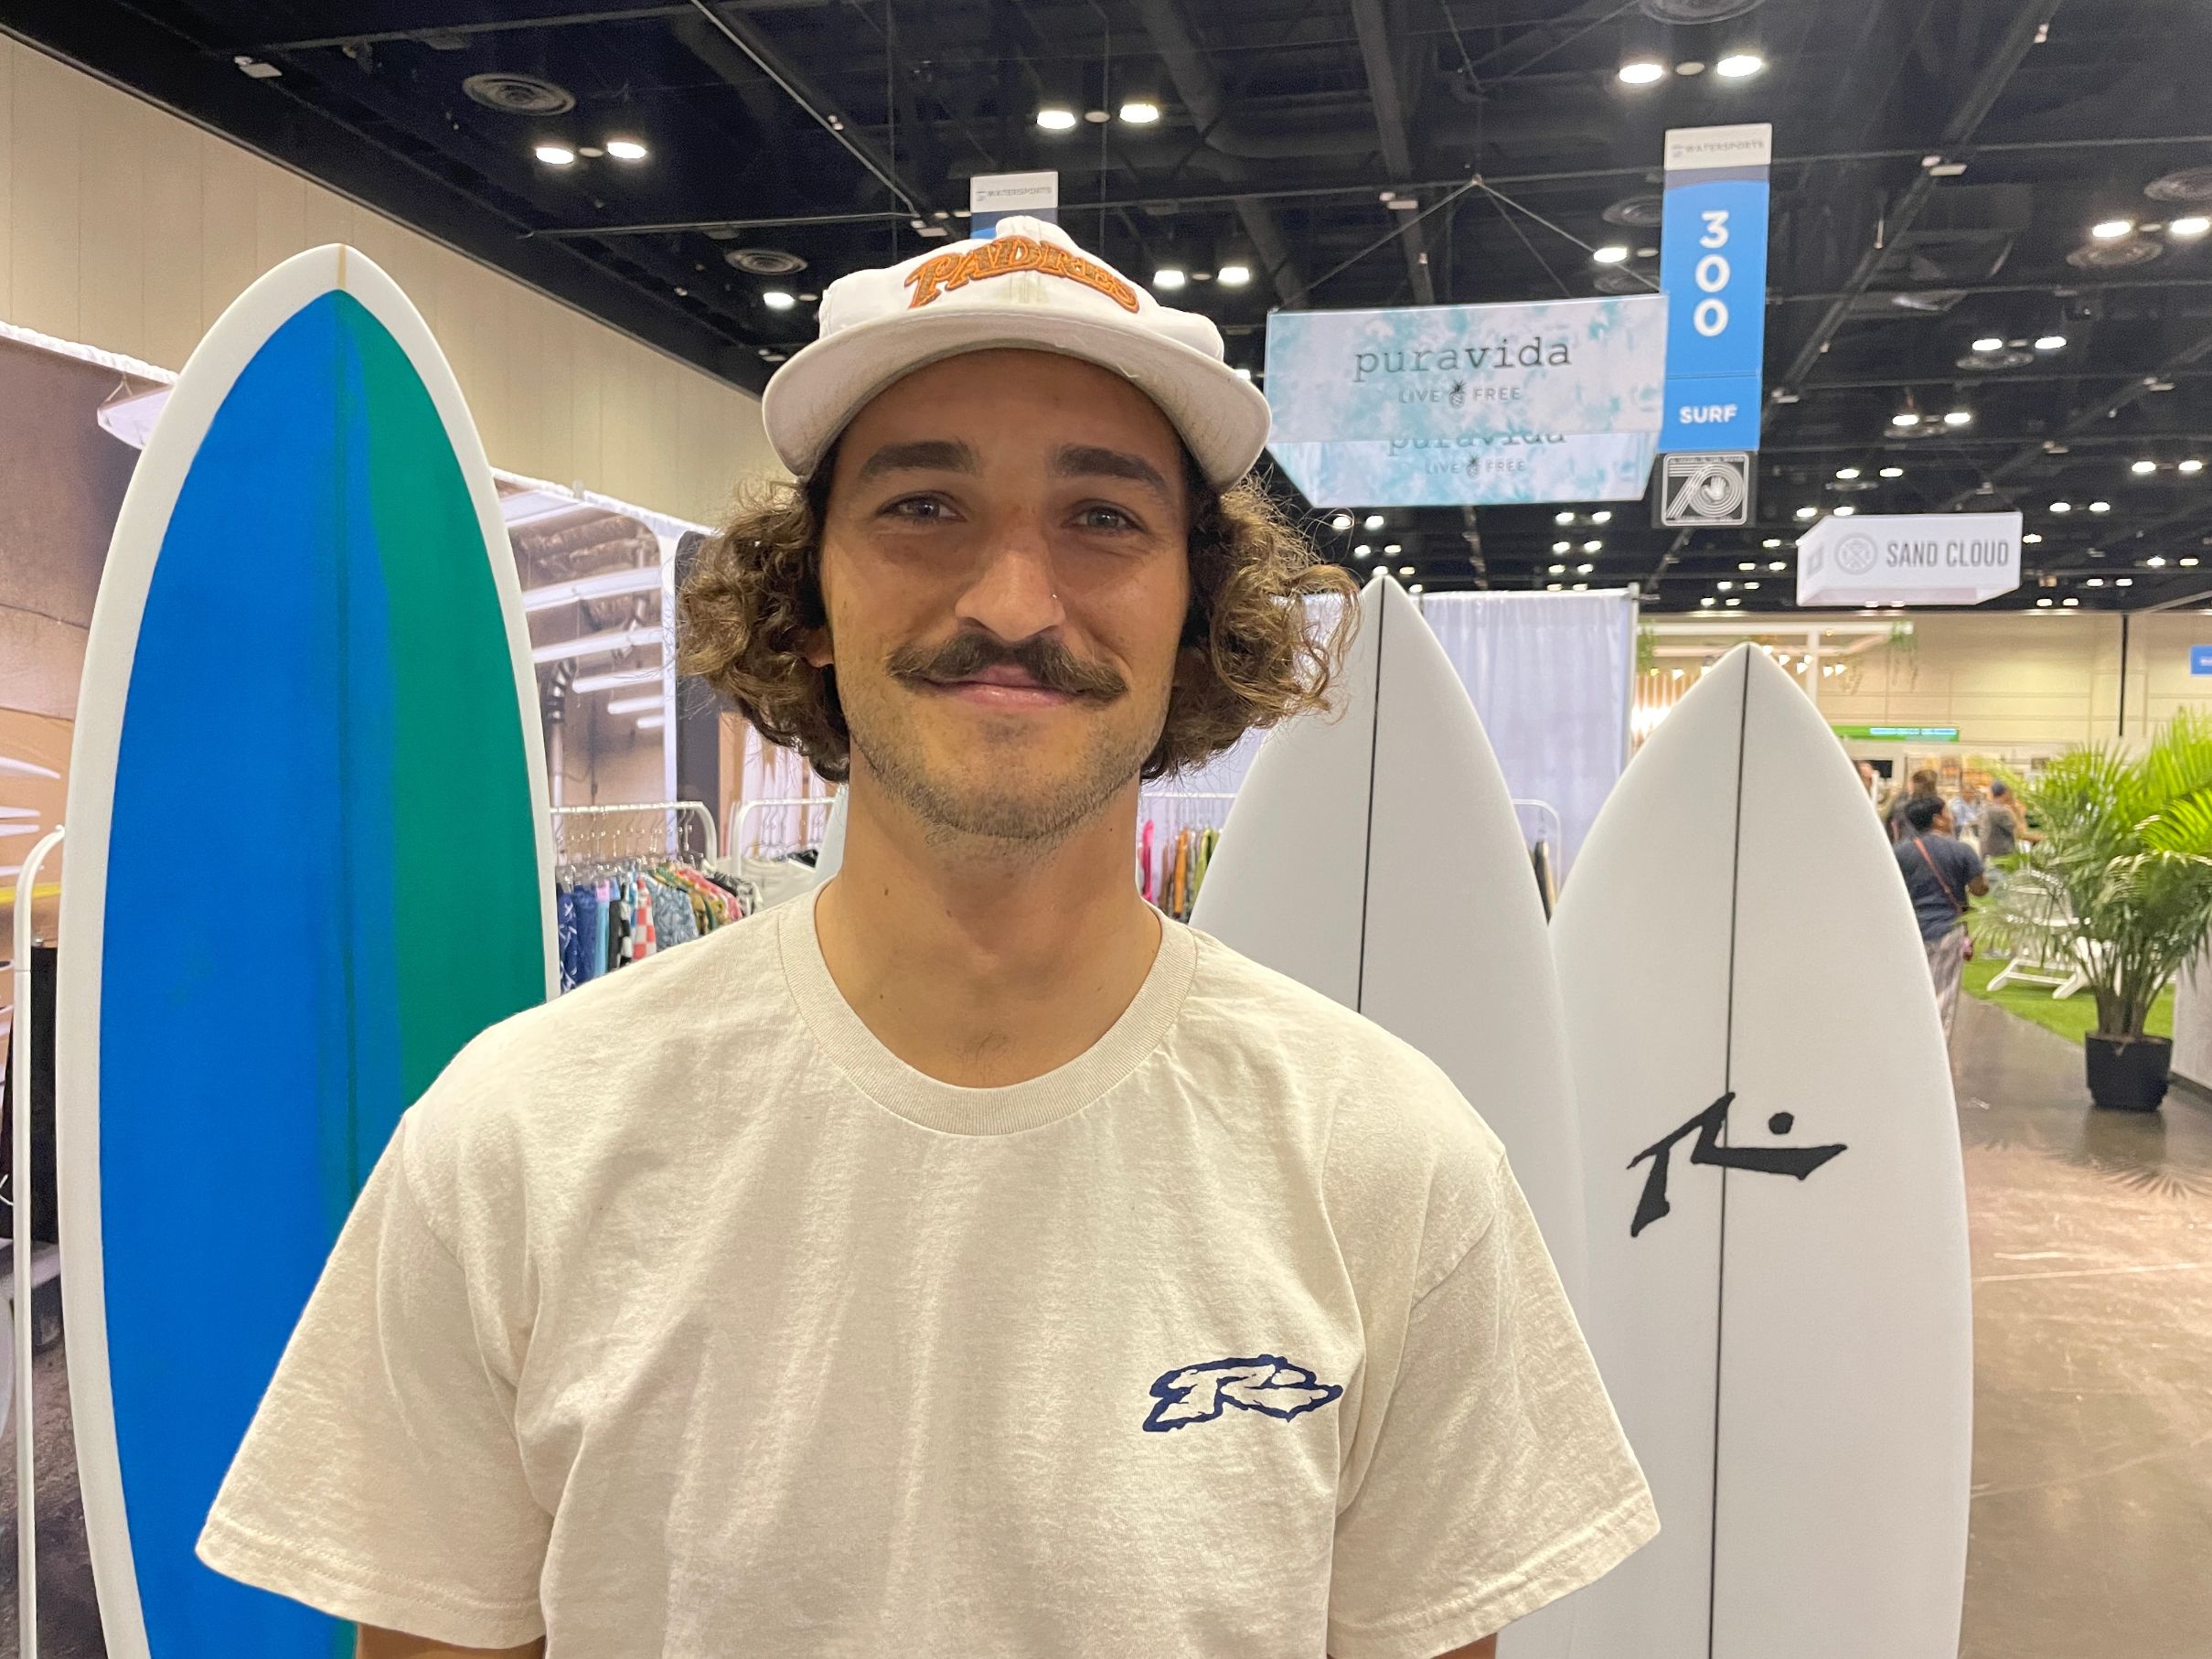 Rusty Surfboard’s Alex Robertson